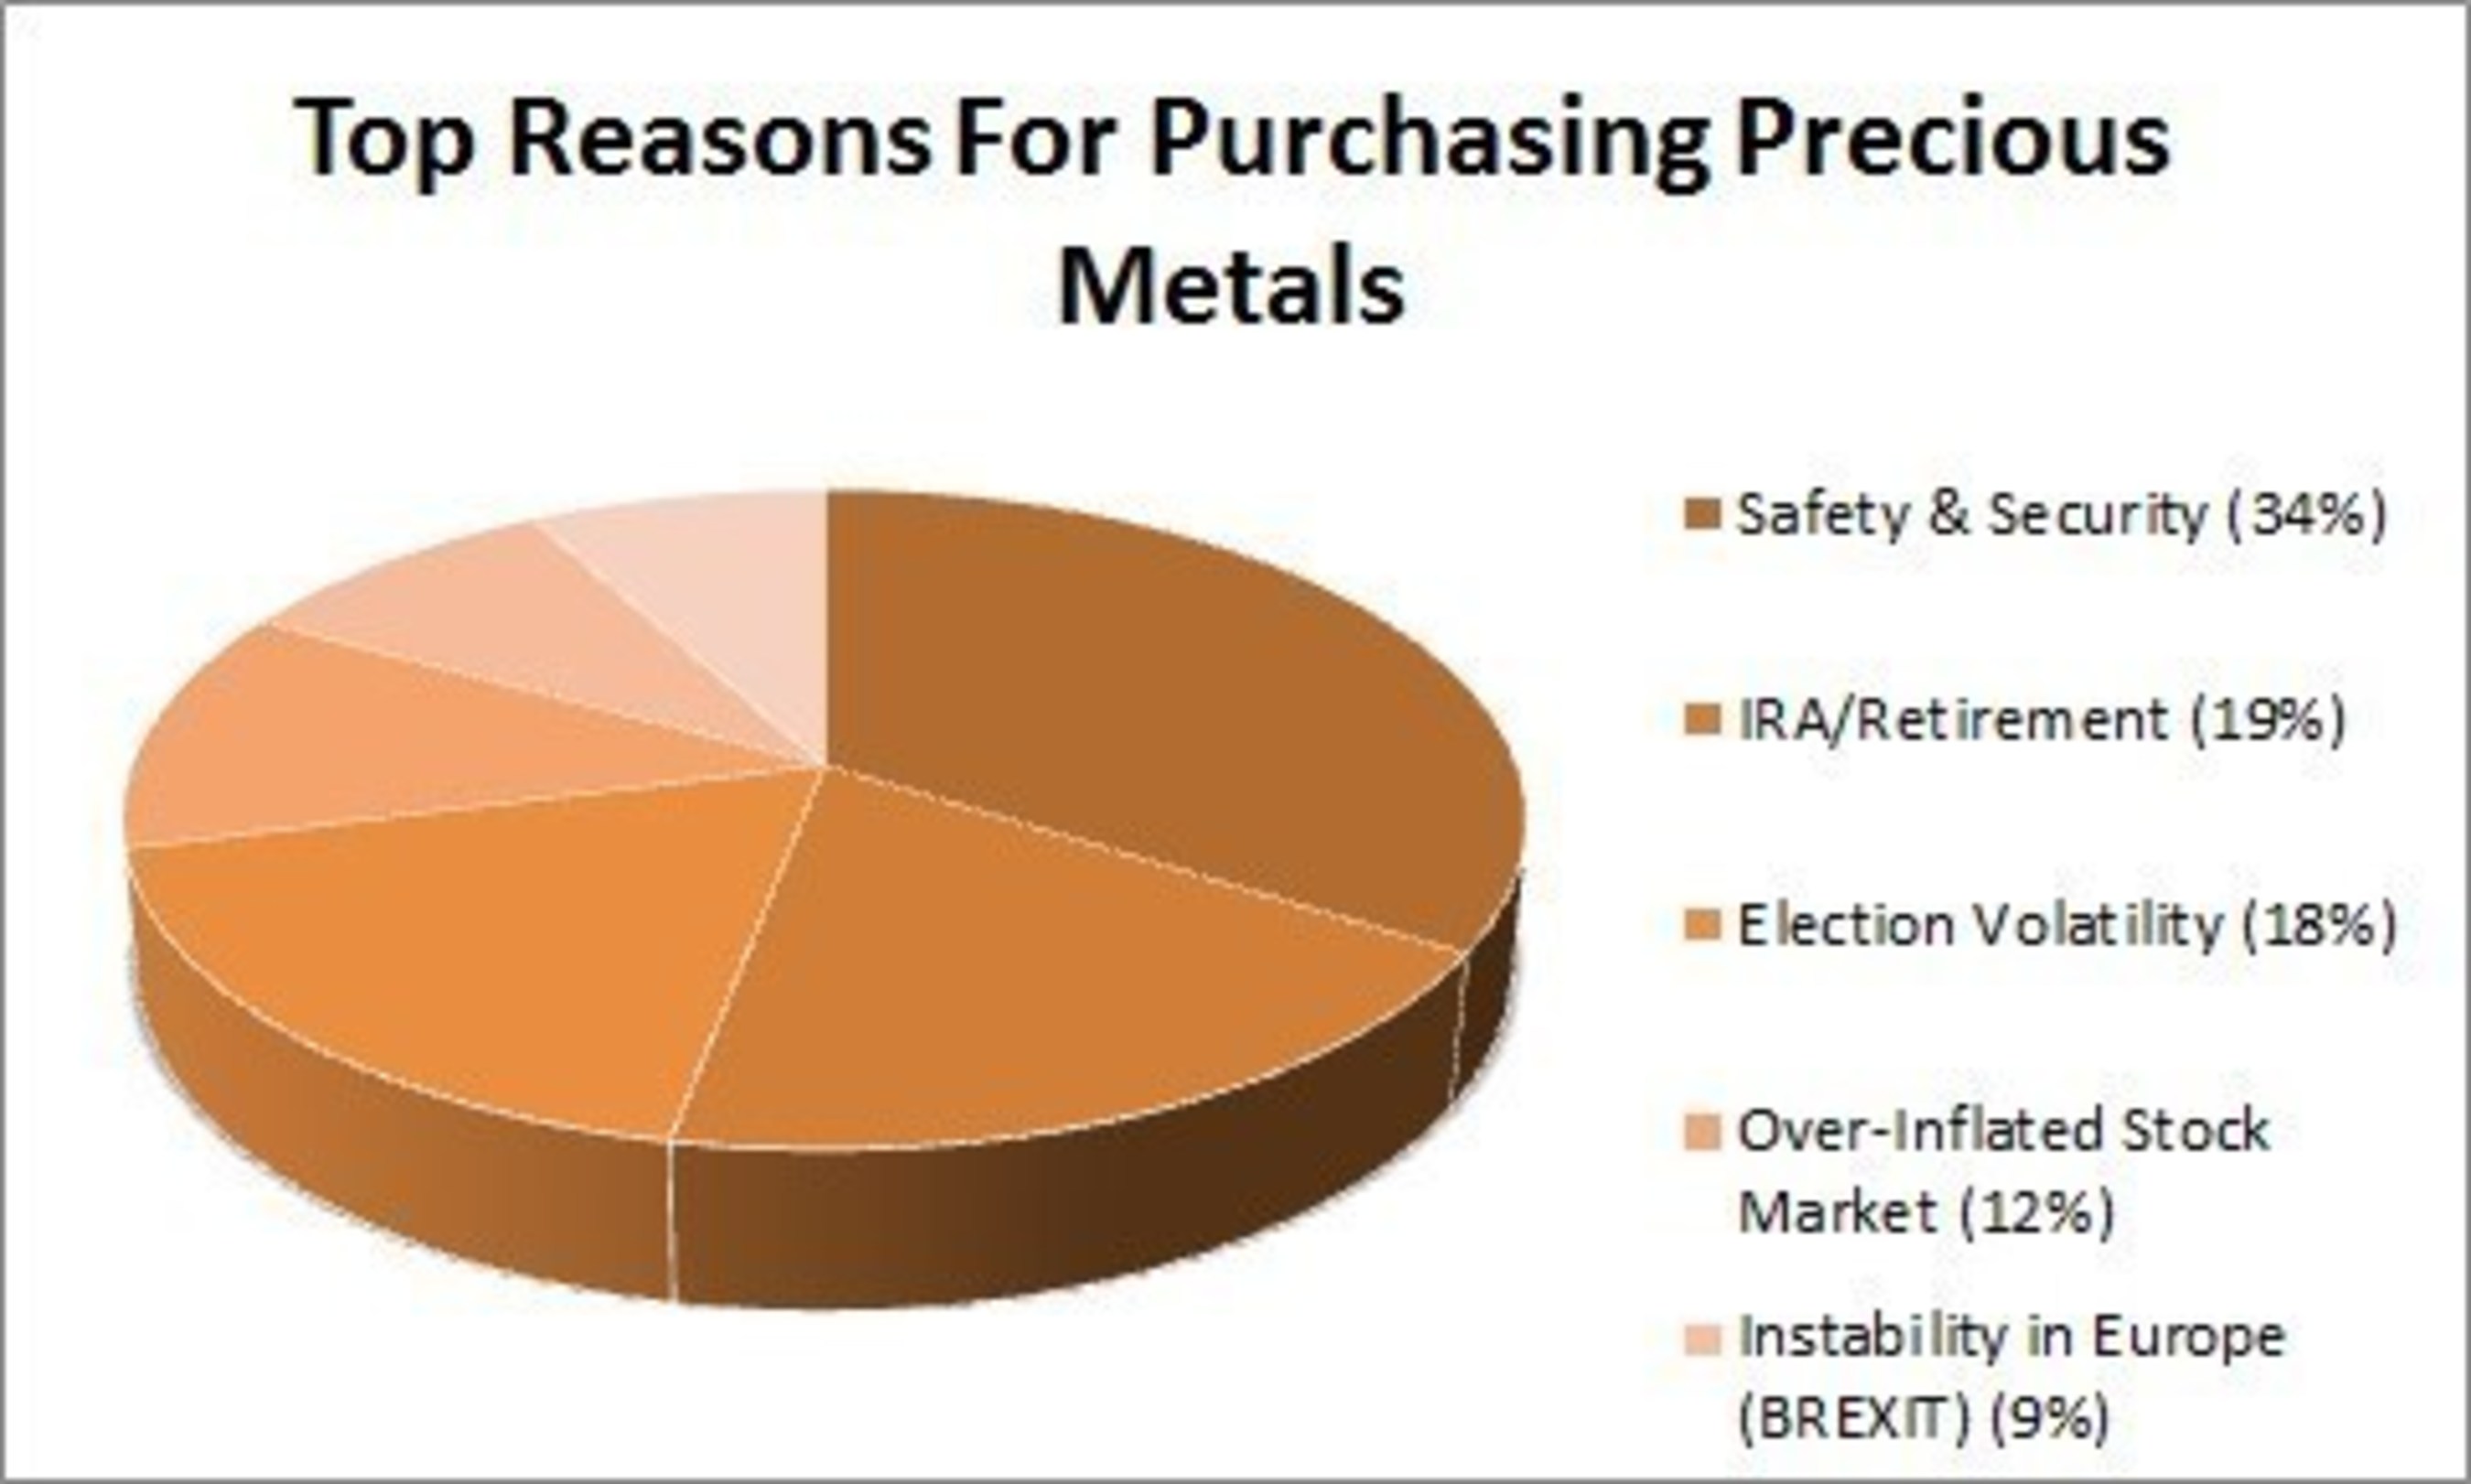 Top Reasons for Purchasing Precious Metals